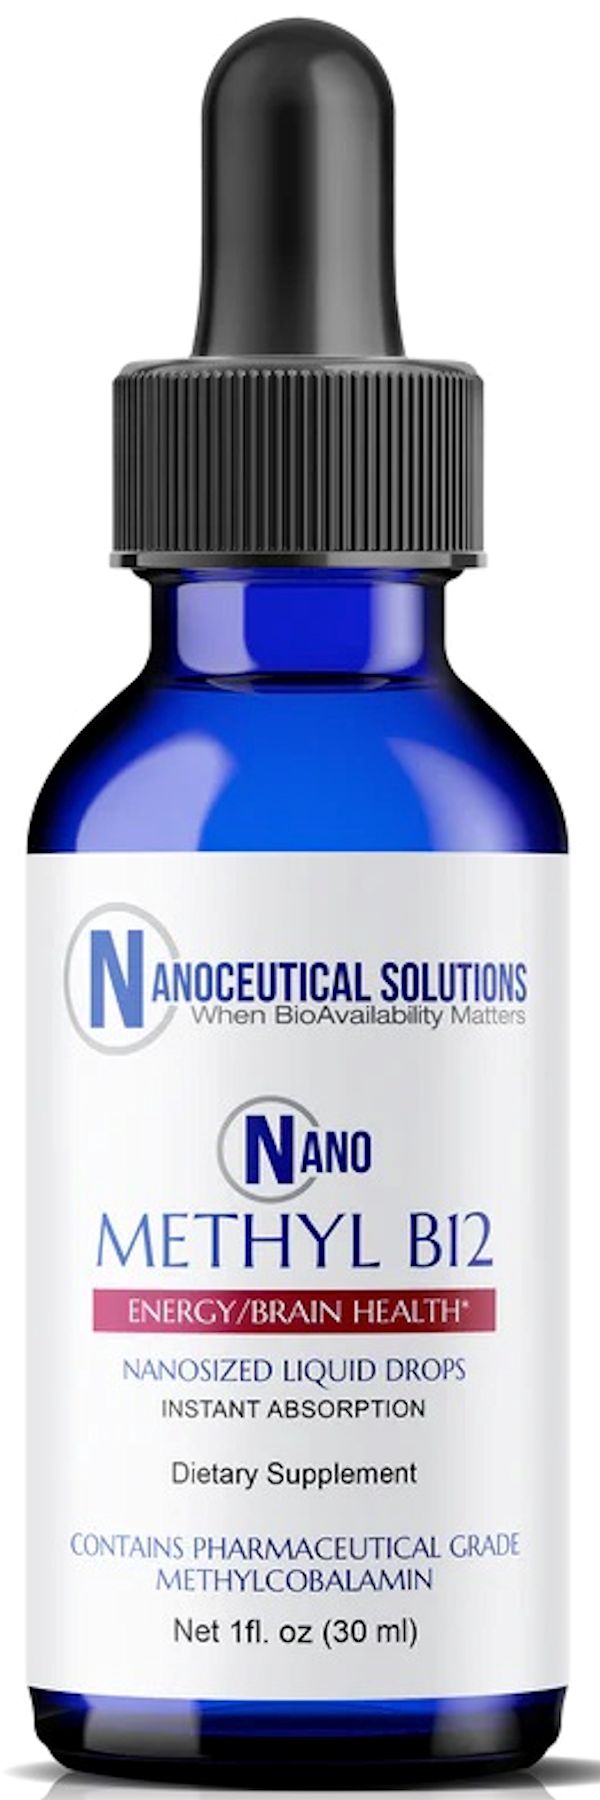 Nanoceutical Solutions Nano Methyl B12 sublingual Nanoceutical Solutions energy 2